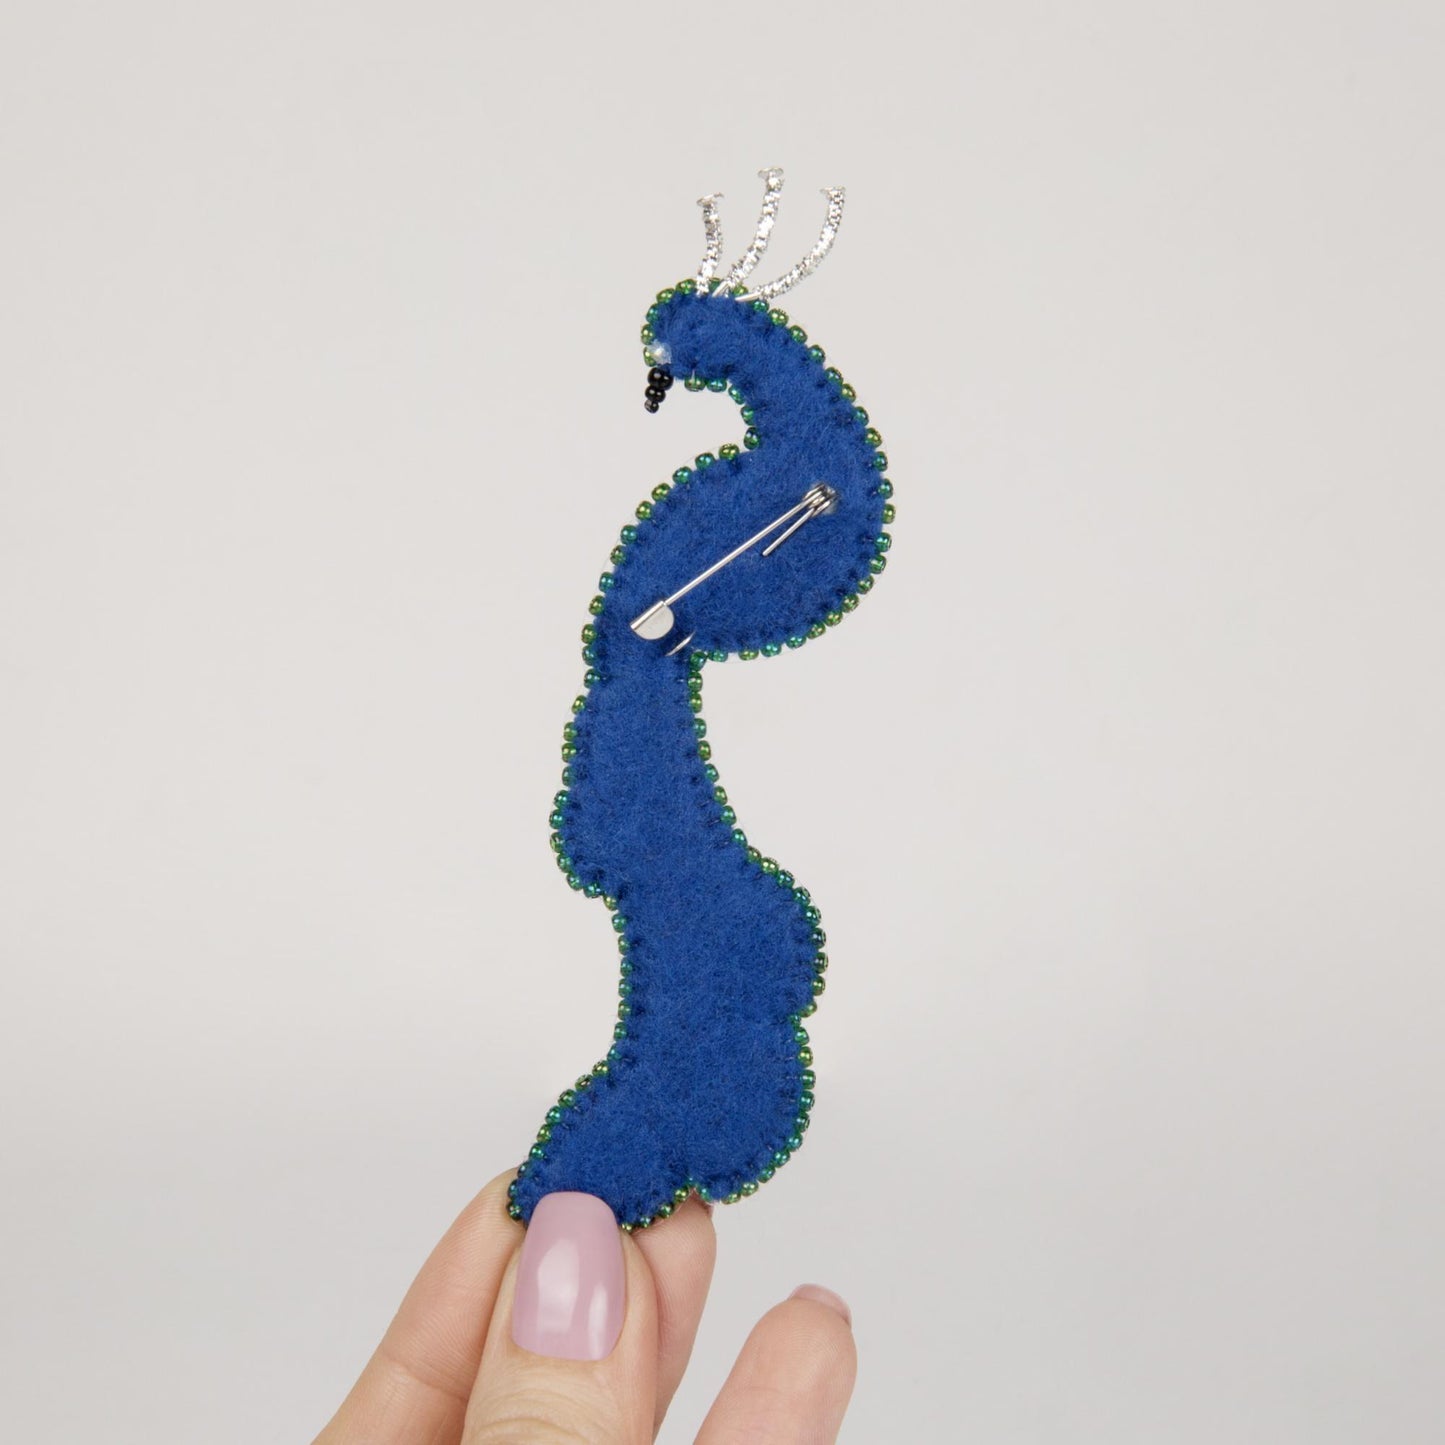 BP-302 Beadwork kit for creating broоch Crystal Art "The Bird of Happiness"